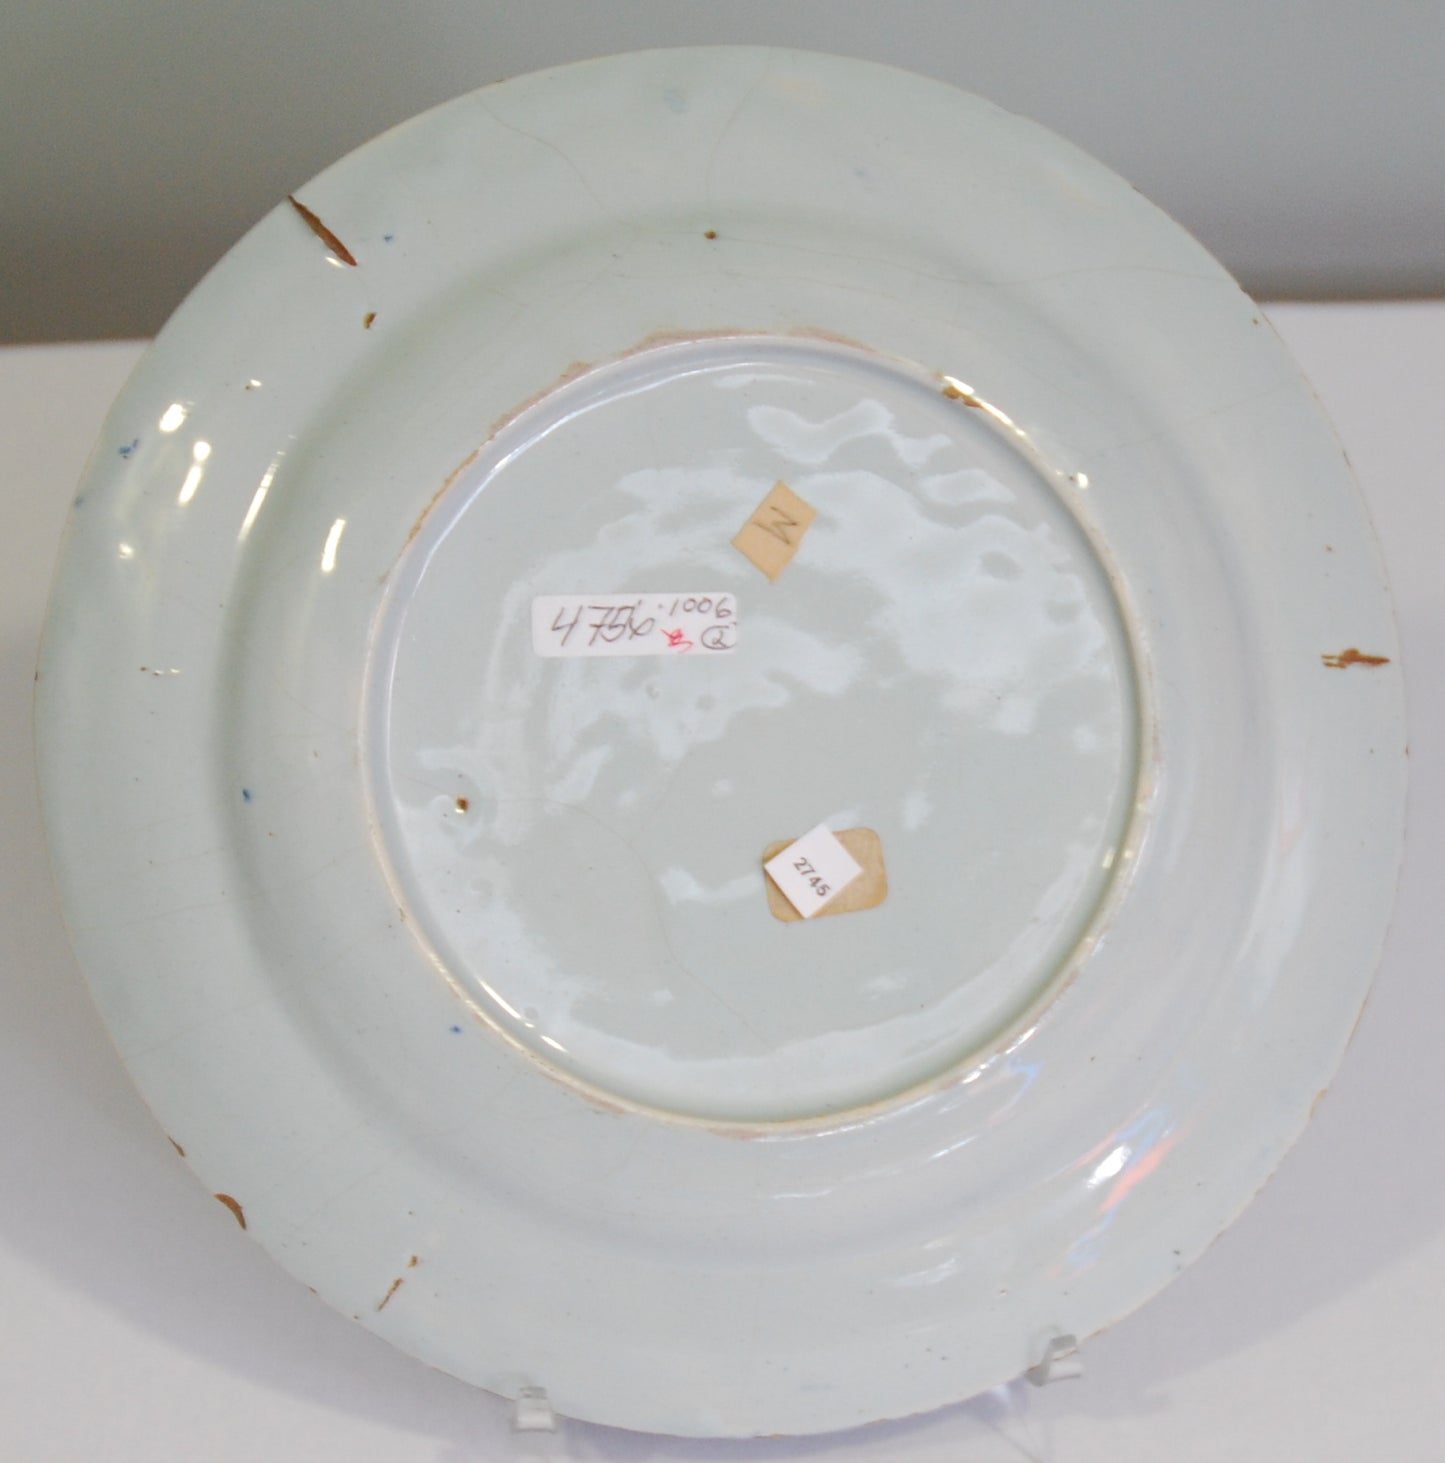 Delftware plate